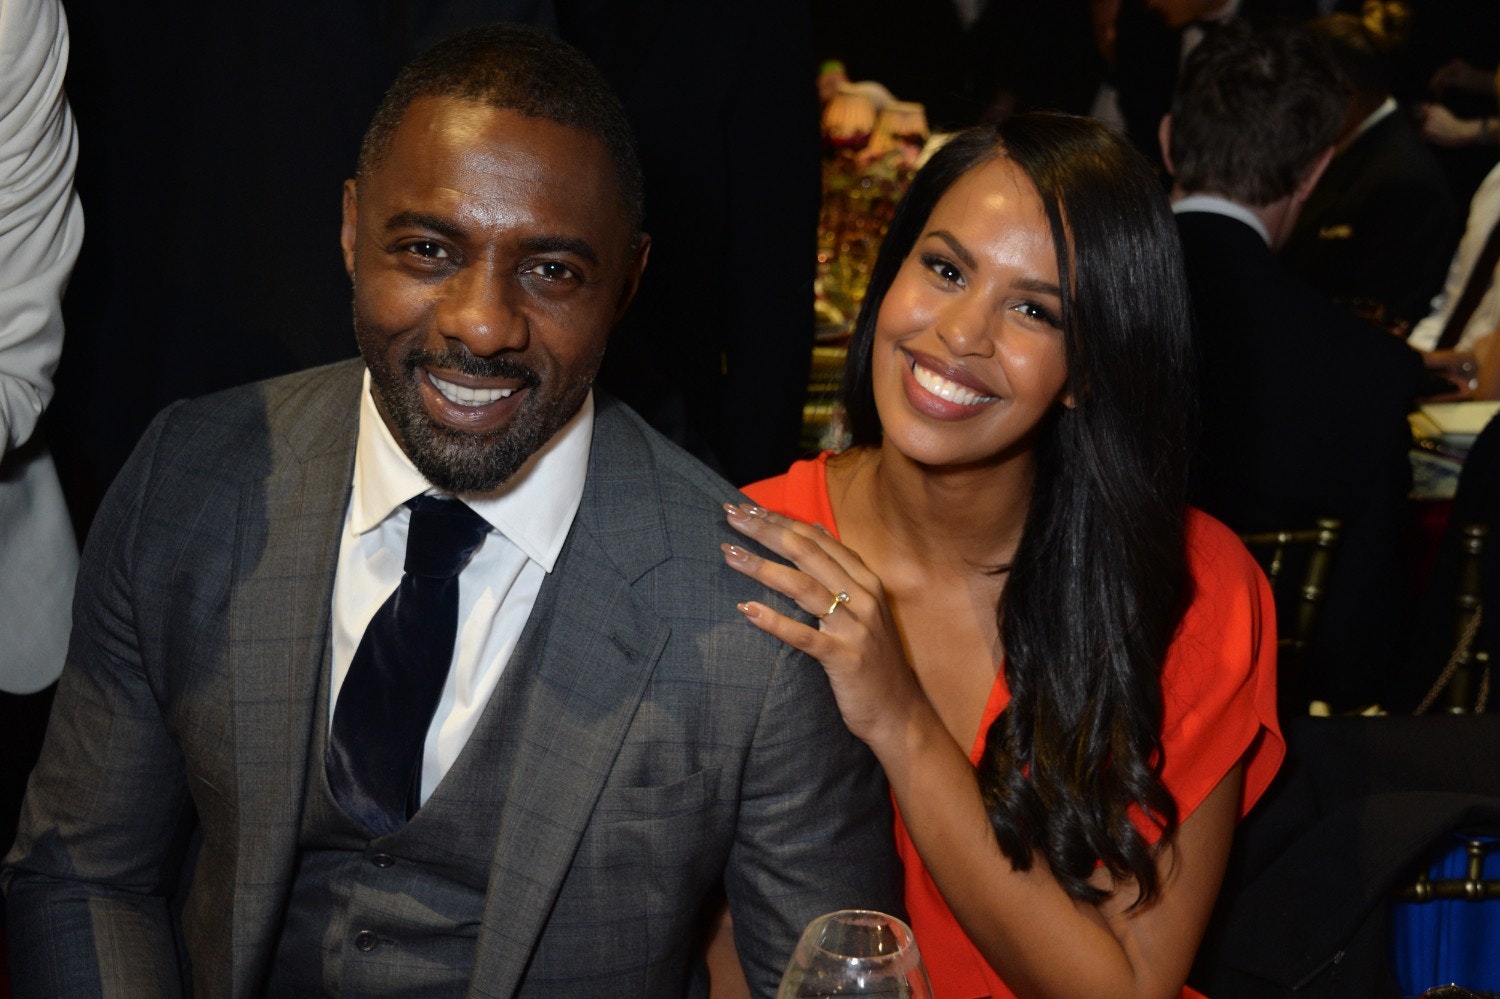 Idris Elba and his wife Sabrina Dhowre